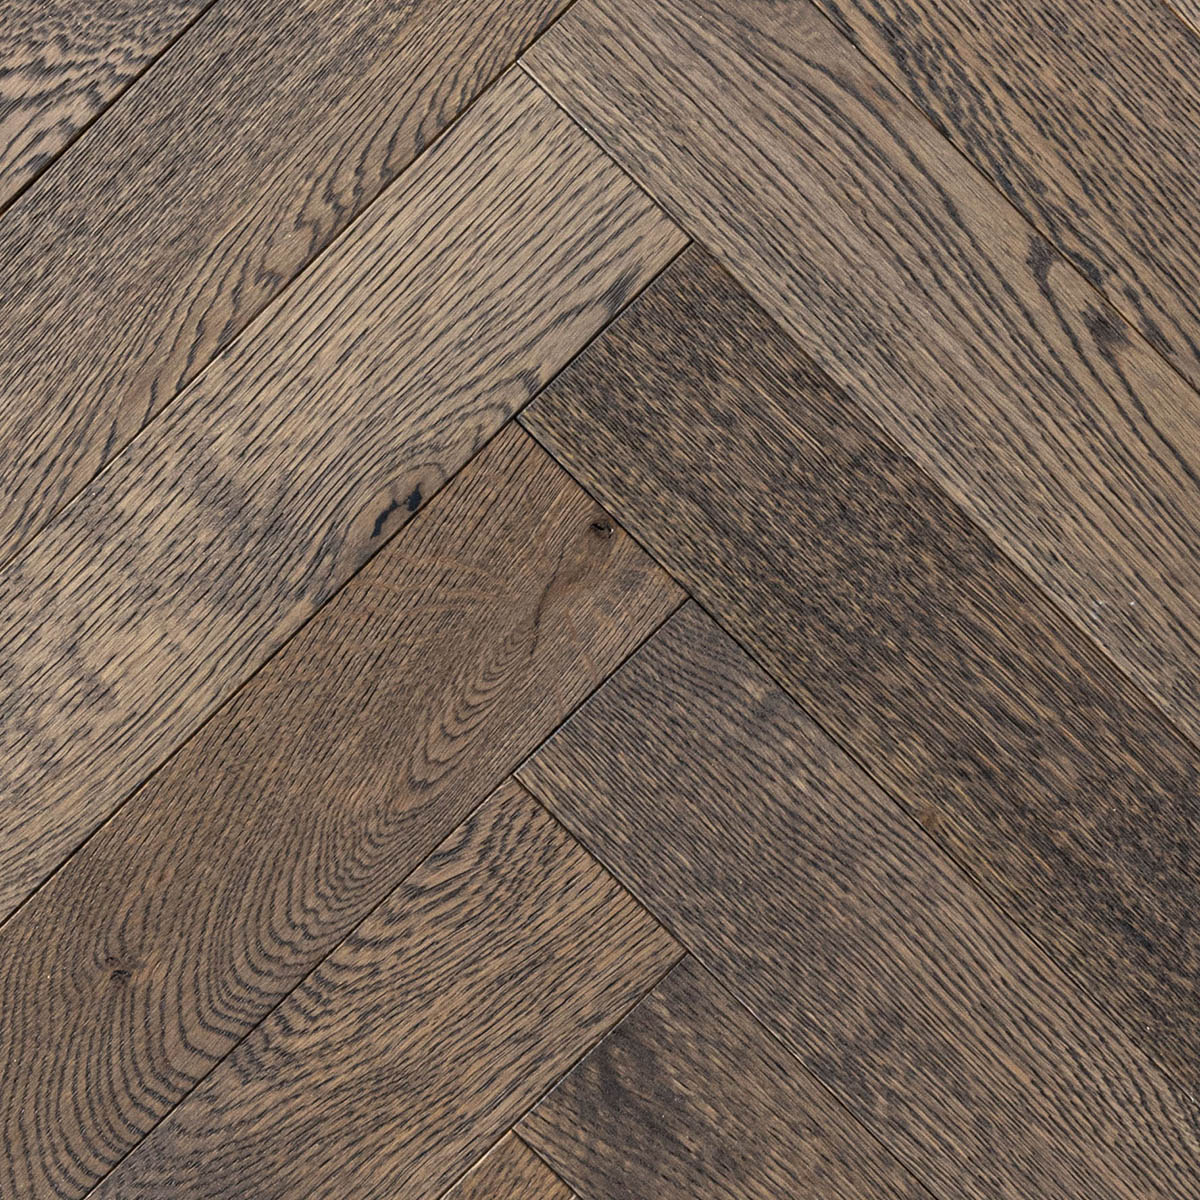 Amberley Grove - Rustic Grade Parquet European Oak Floor